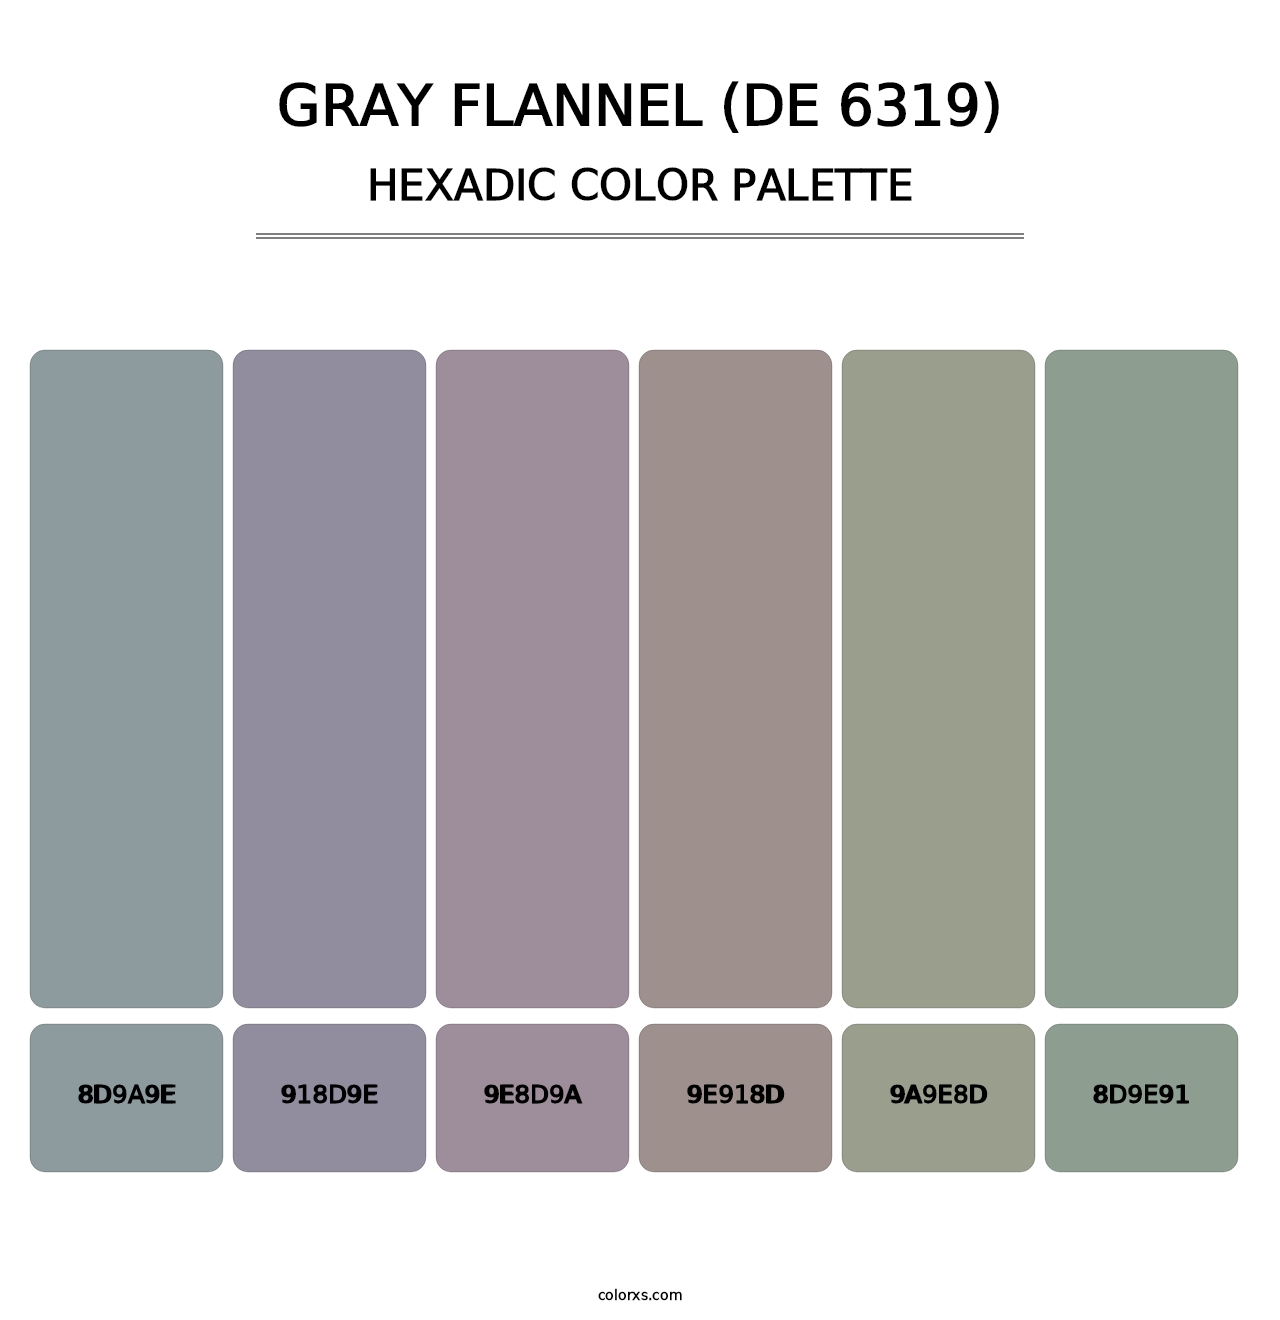 Gray Flannel (DE 6319) - Hexadic Color Palette